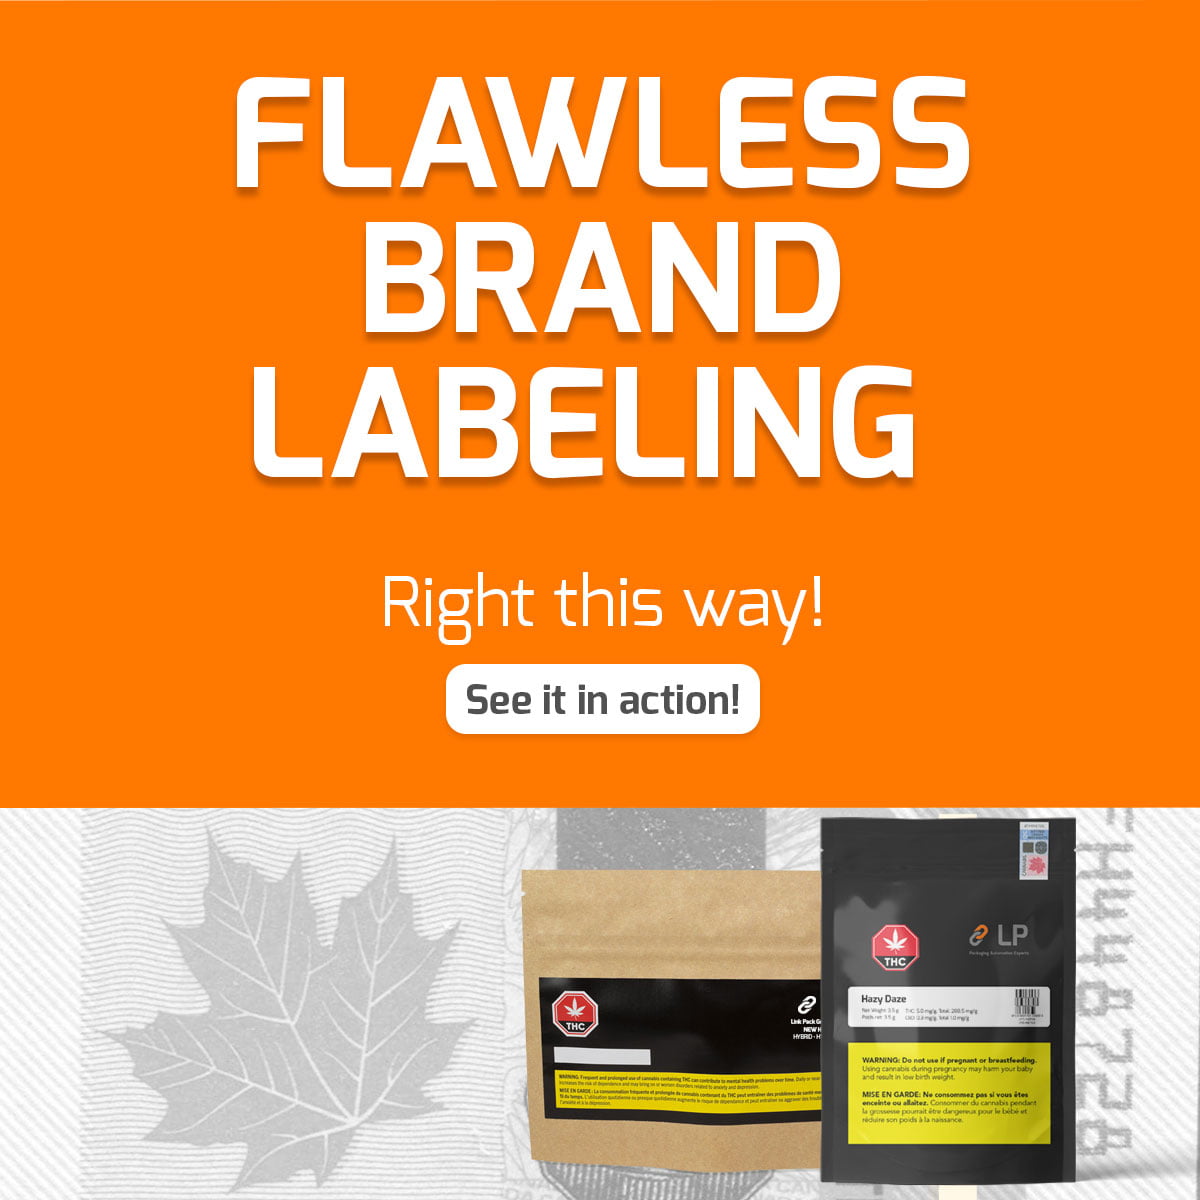 Brand Labeling